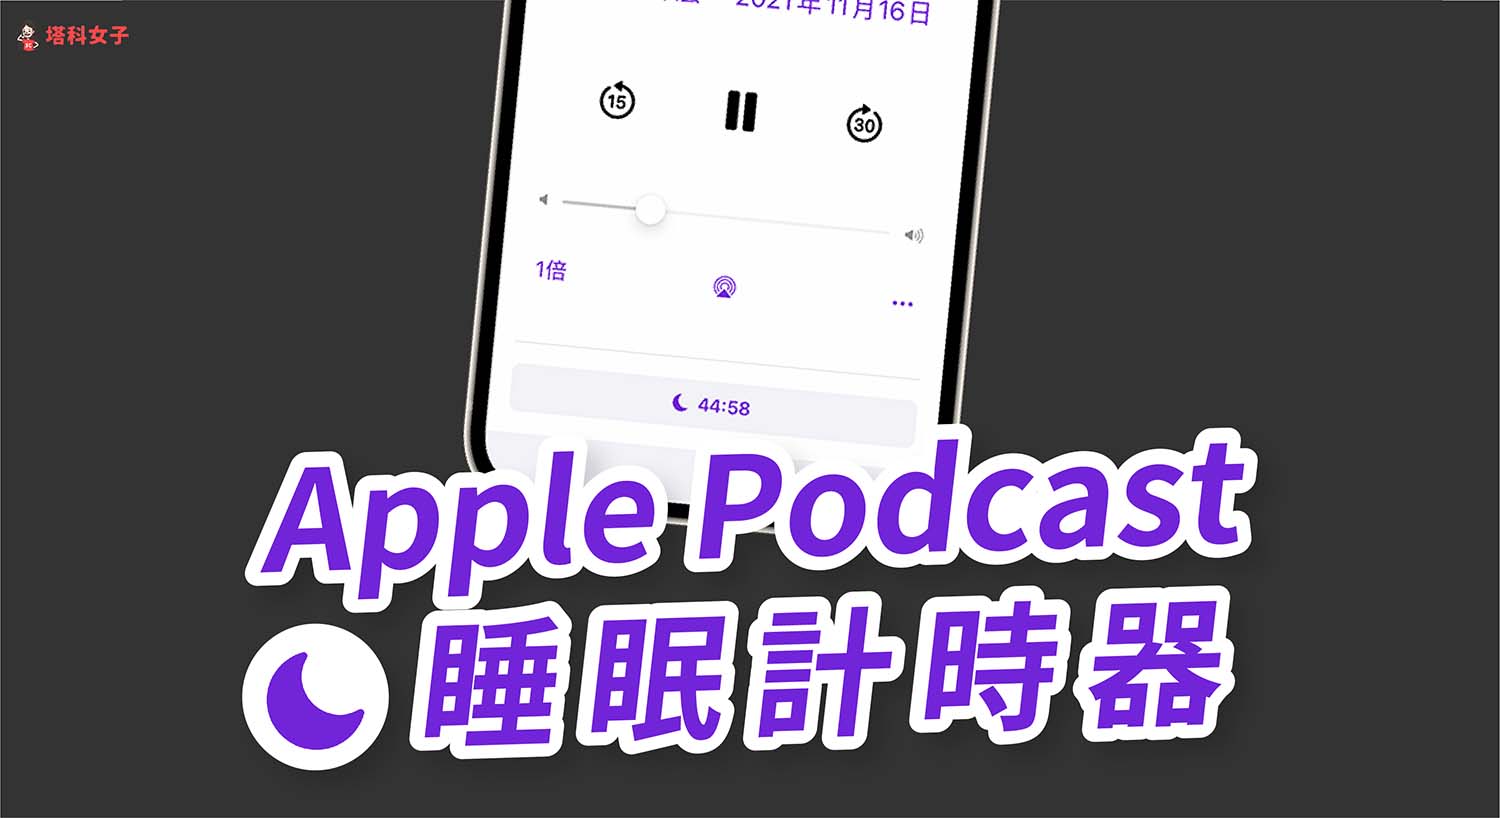 Apple Podcast 如何設定定時或睡眠計時器？時間到自動暫停播放